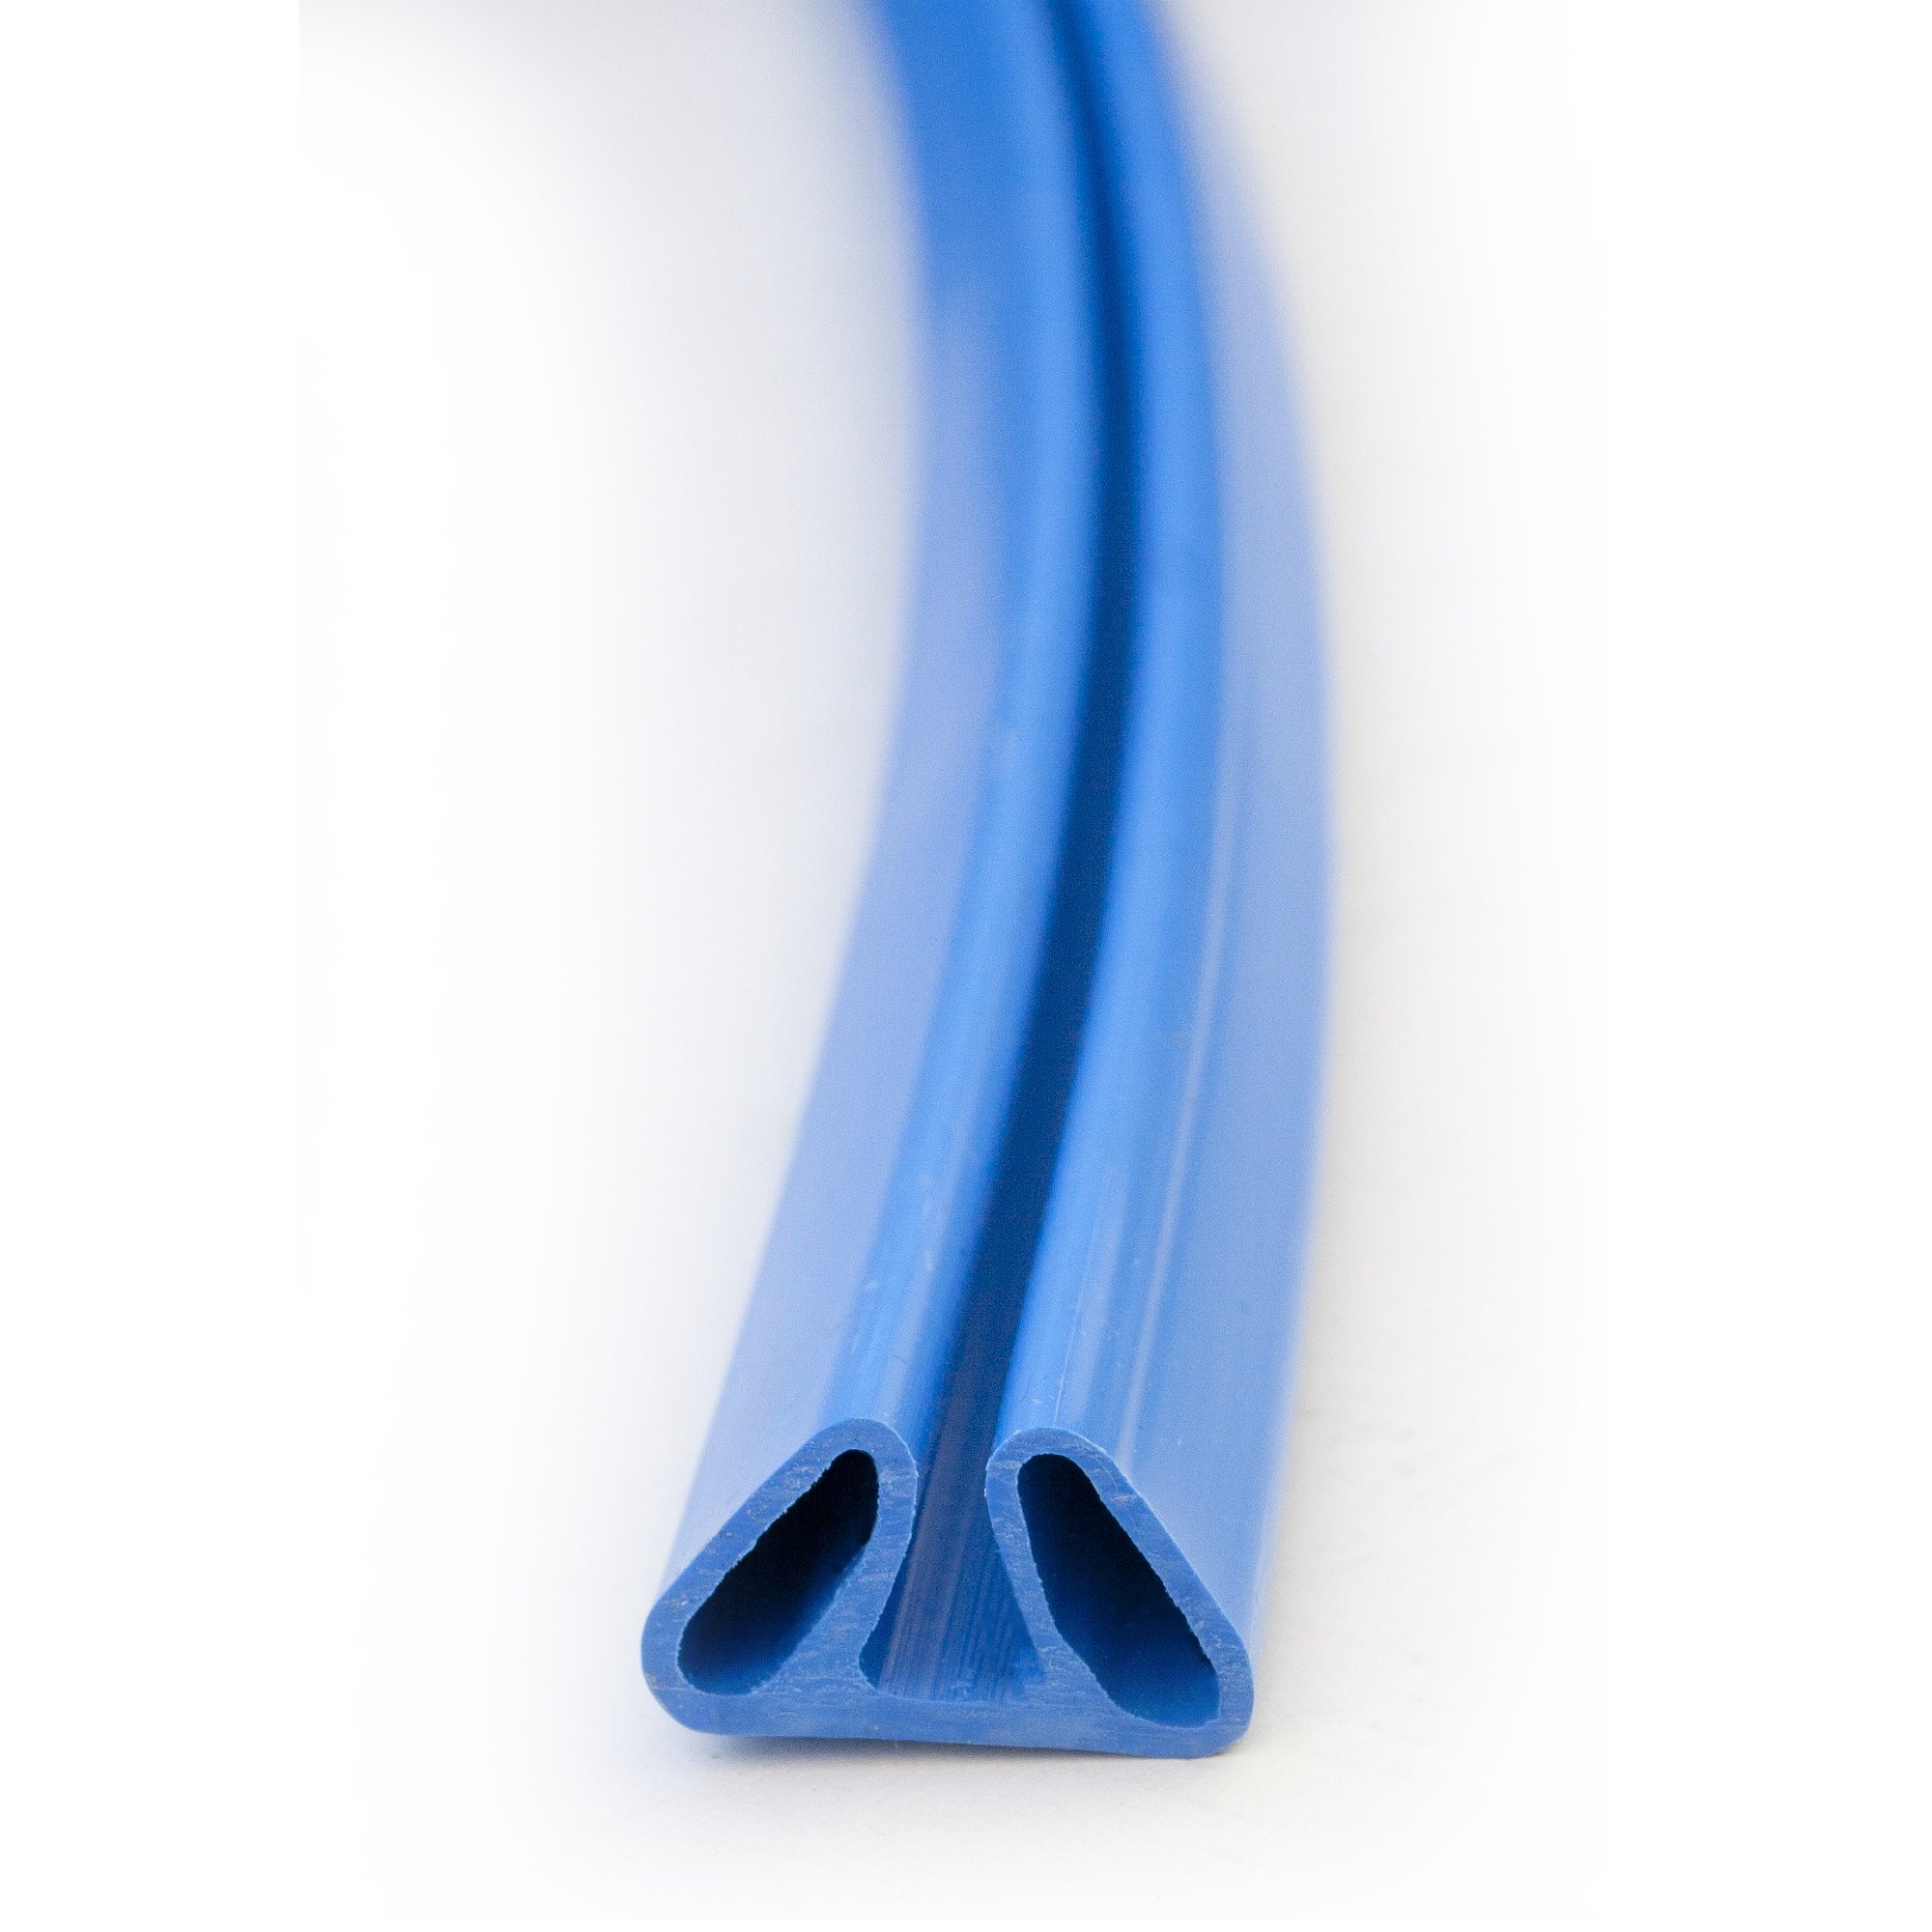 Stahlwandpool Set (7-teilig) halbhoch rund Baja 350 x 120 cm, Stahl 0,6 mm weiß Folie 0,6 mm blau